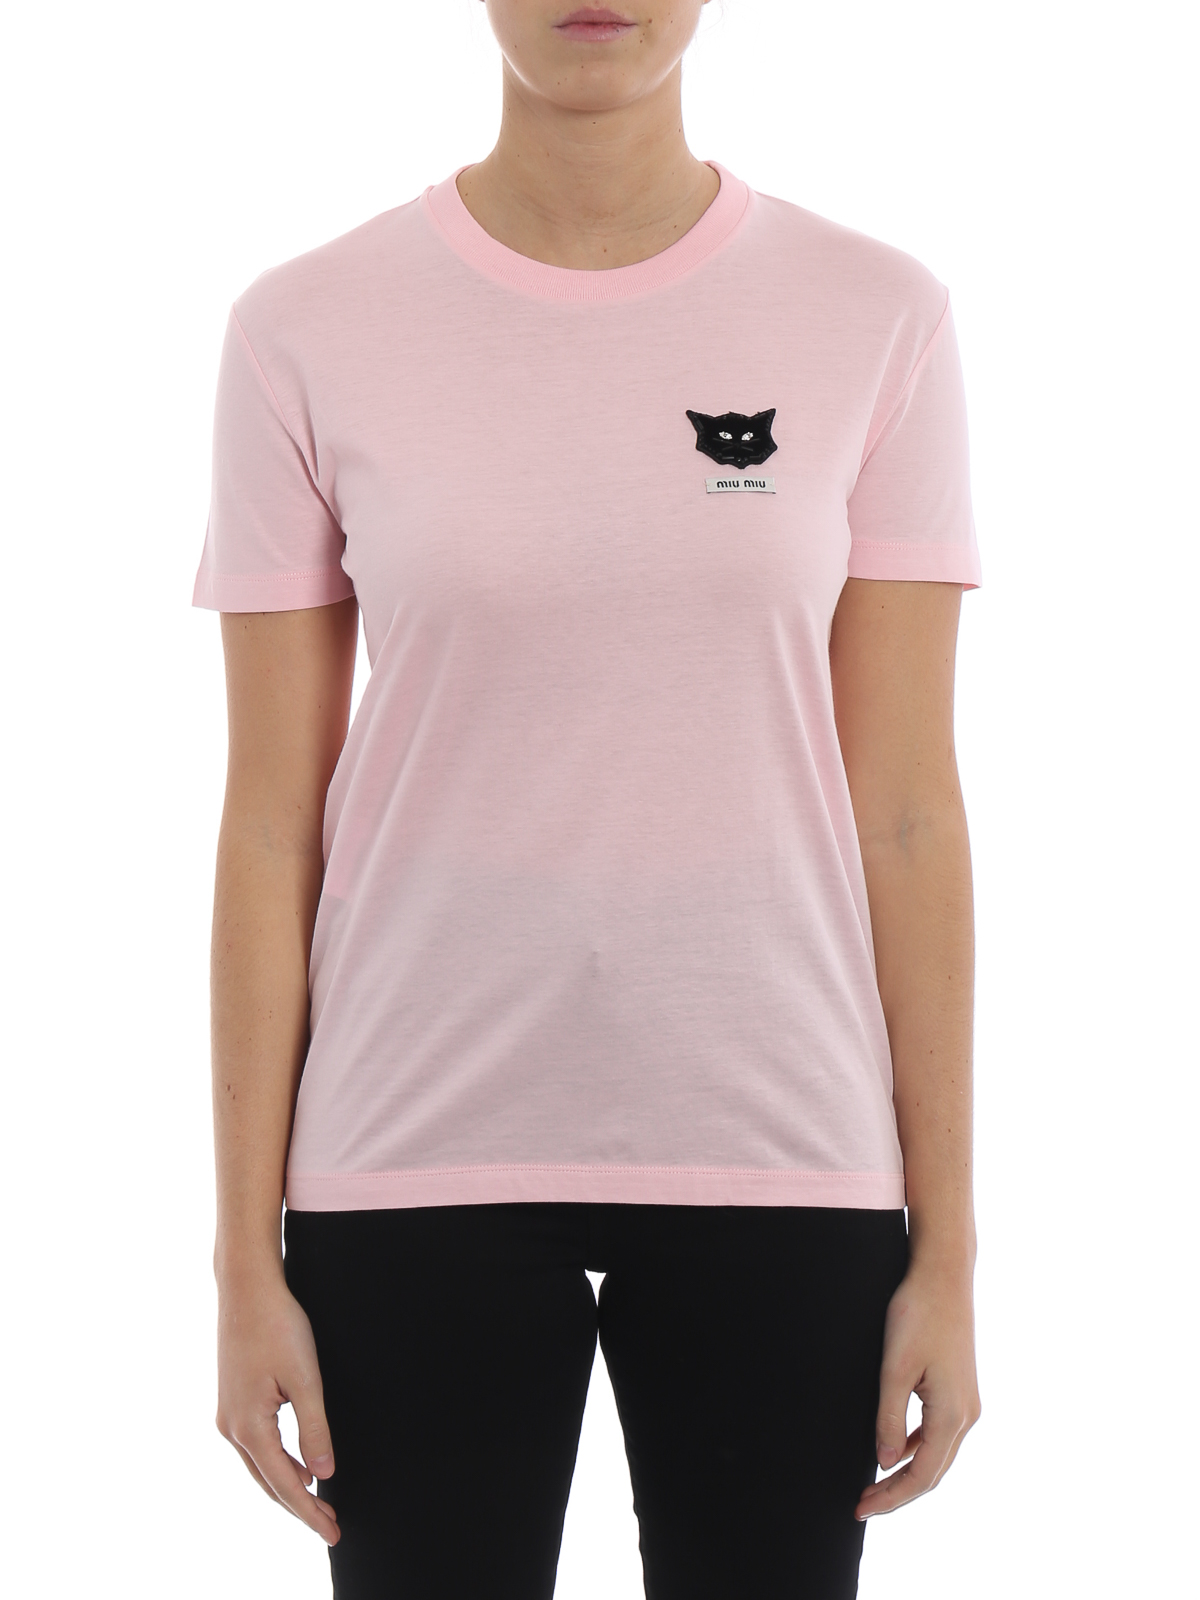 Tシャツ Miu Miu - Tシャツ - ピンク - MJN0841TEI028 | iKRIX.com